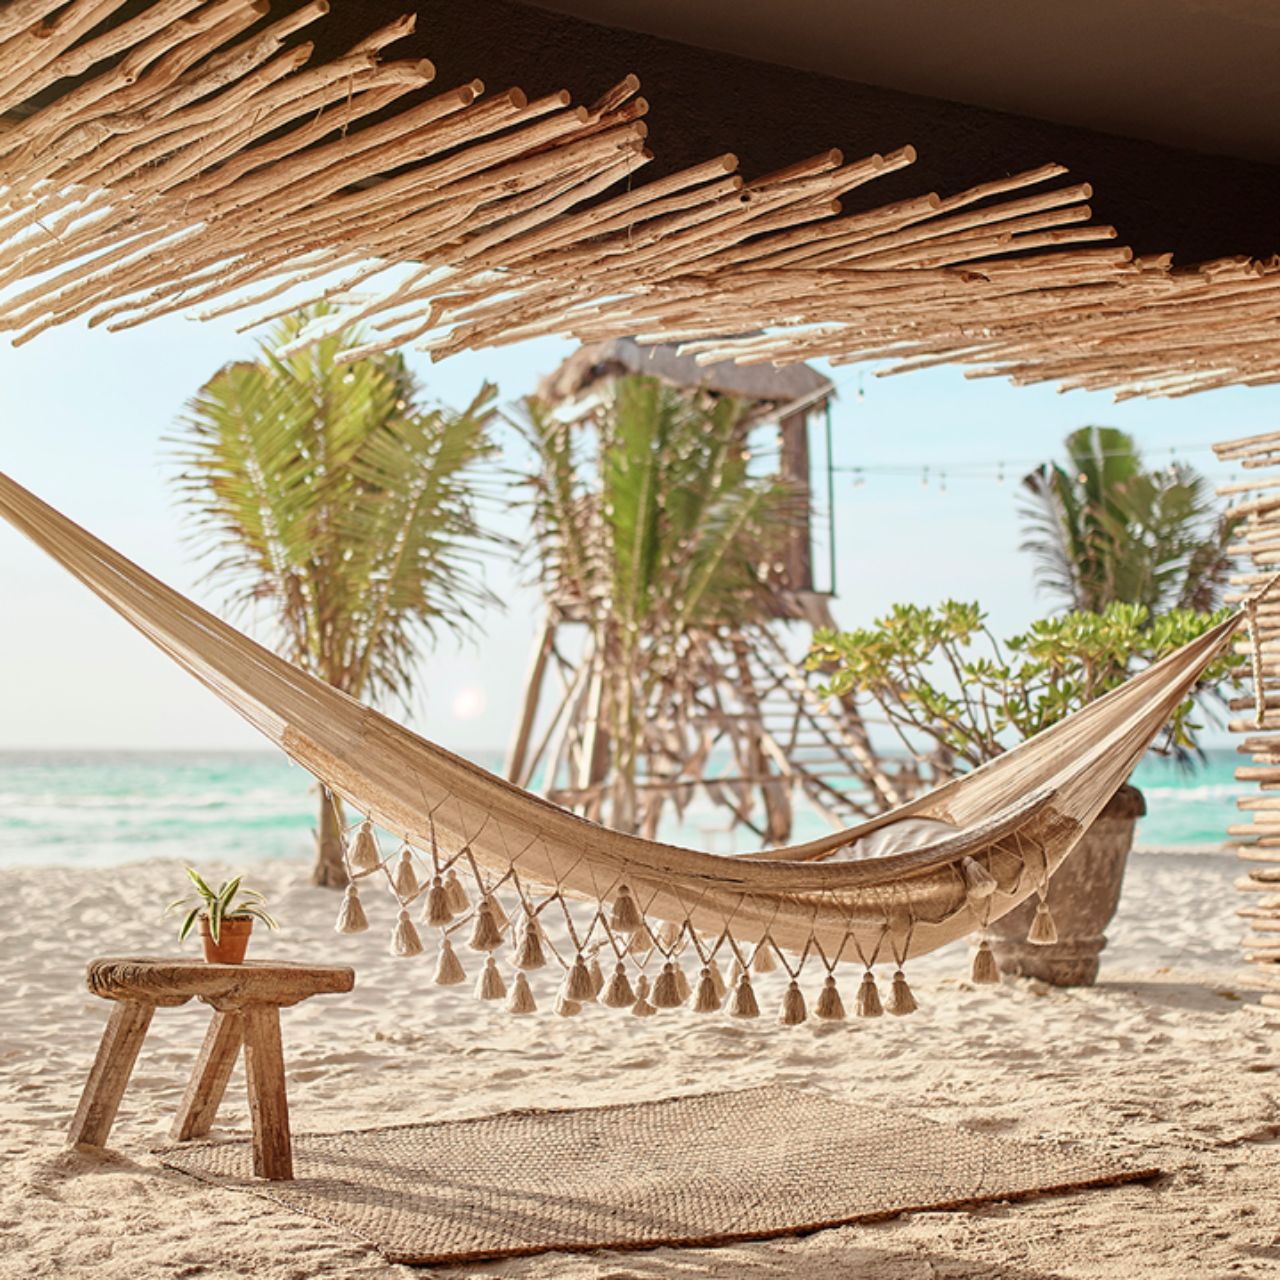 SacBe - Marriott Cancun Resort Restaurant - Cancún, , ROO | OpenTable